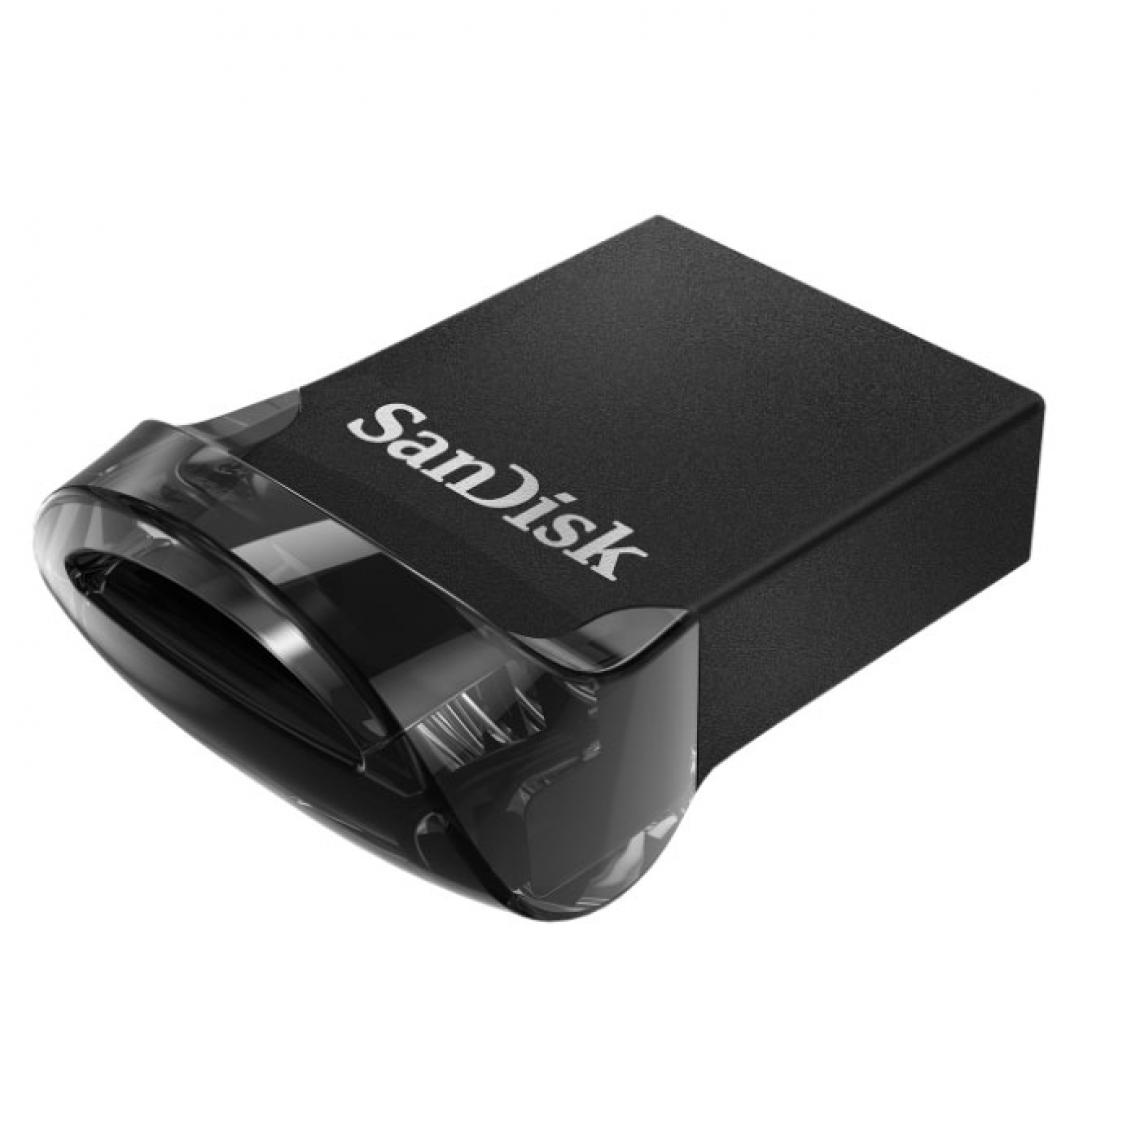 Sandisk - SanDisk Ultra Fit USB 3.0 Flash Drive 512 Go - Clés USB